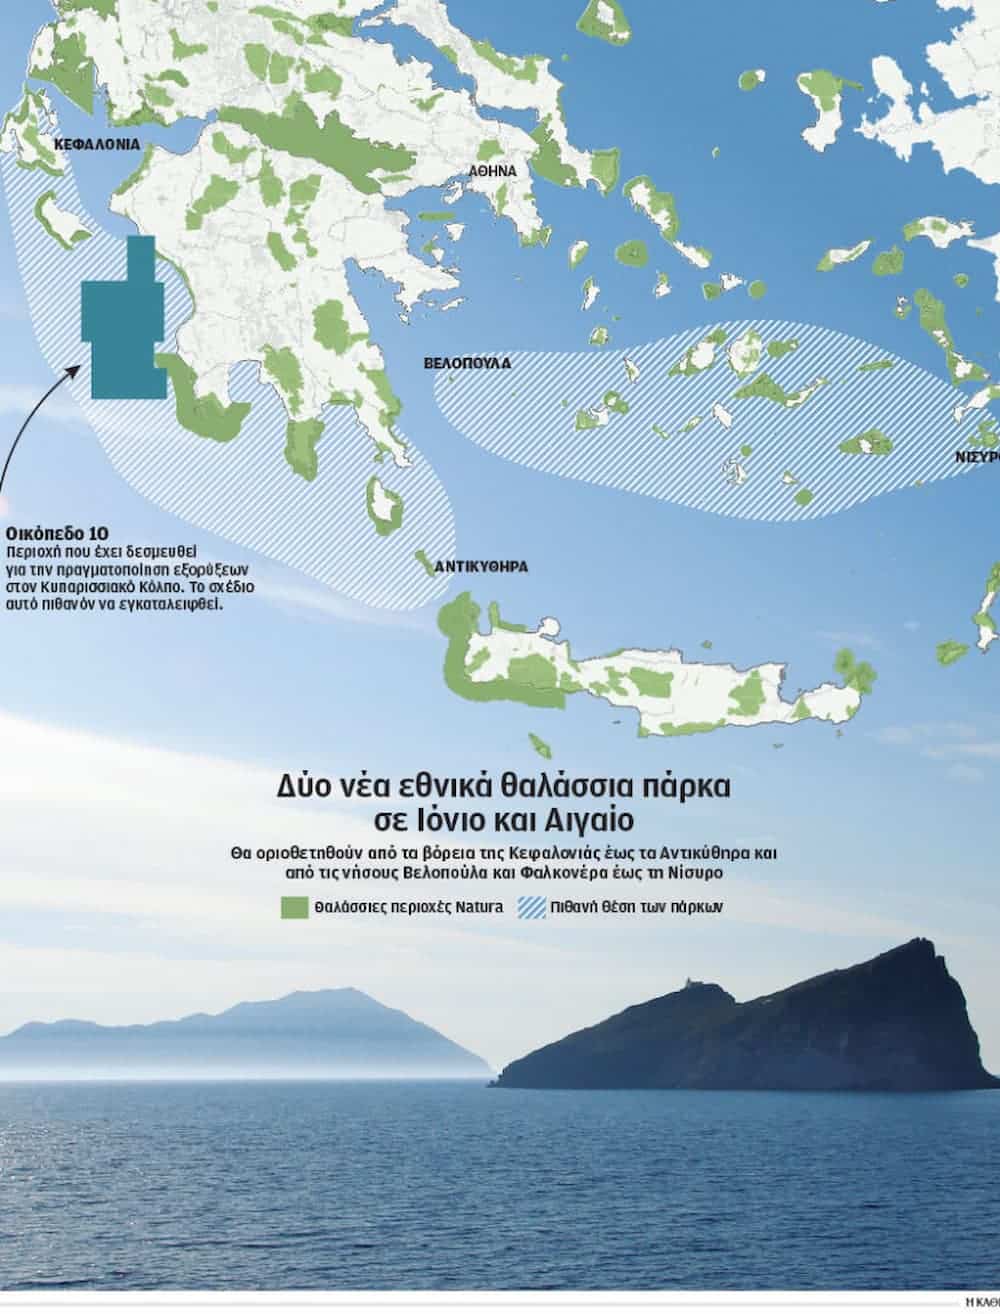 thalassio parko 1 - Η Τουρκία αντιδρά για τα θαλάσσια πάρκα - Θέτει ζήτημα αμφισβήτησης της ελληνικής κυριαρχίας των νησιών